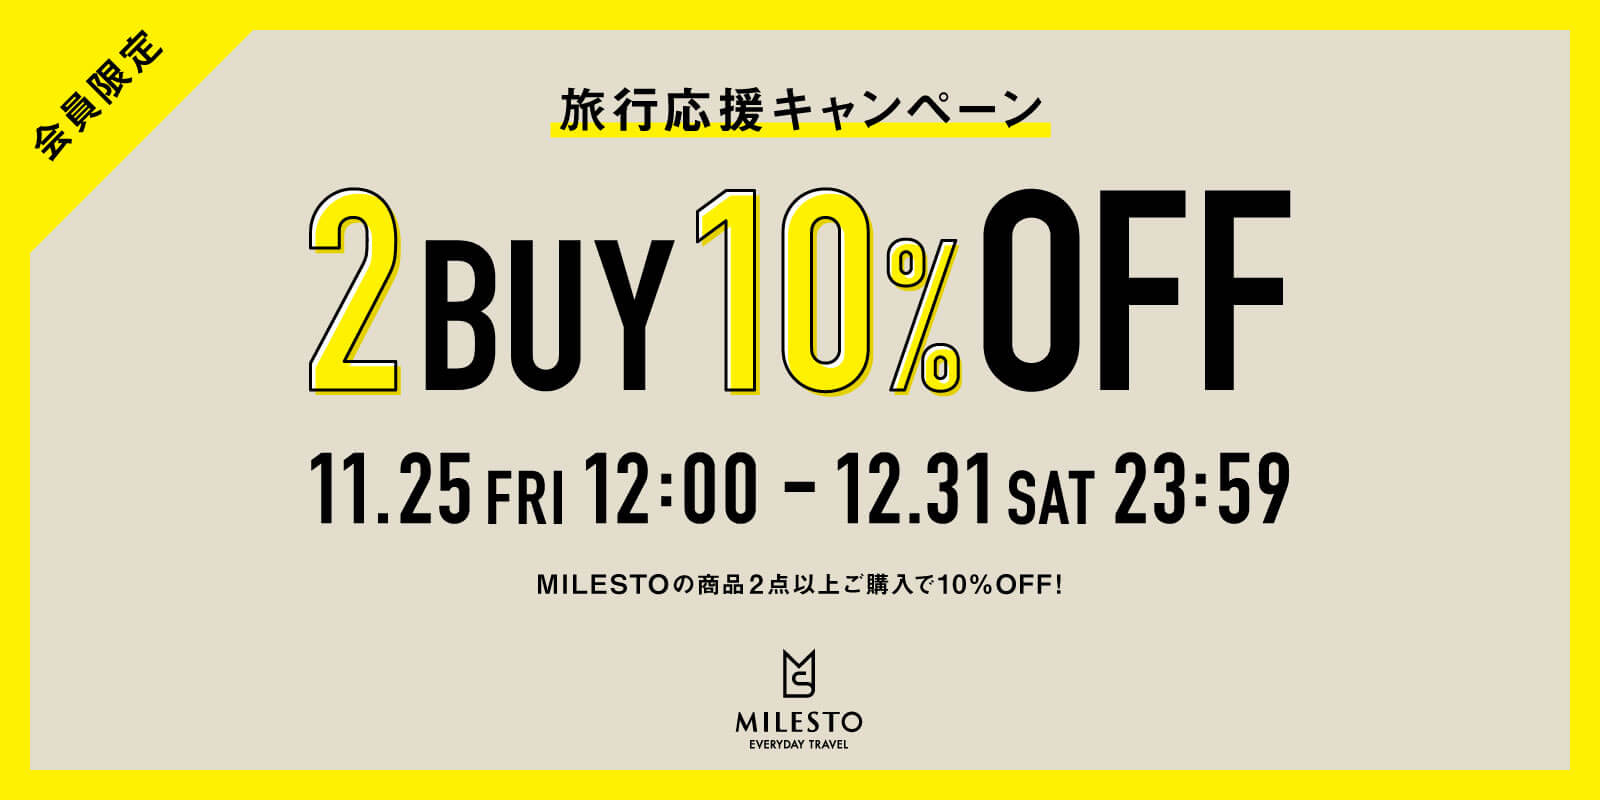 MILESTO 旅行応援キャンペーン 2BUY10%OFF